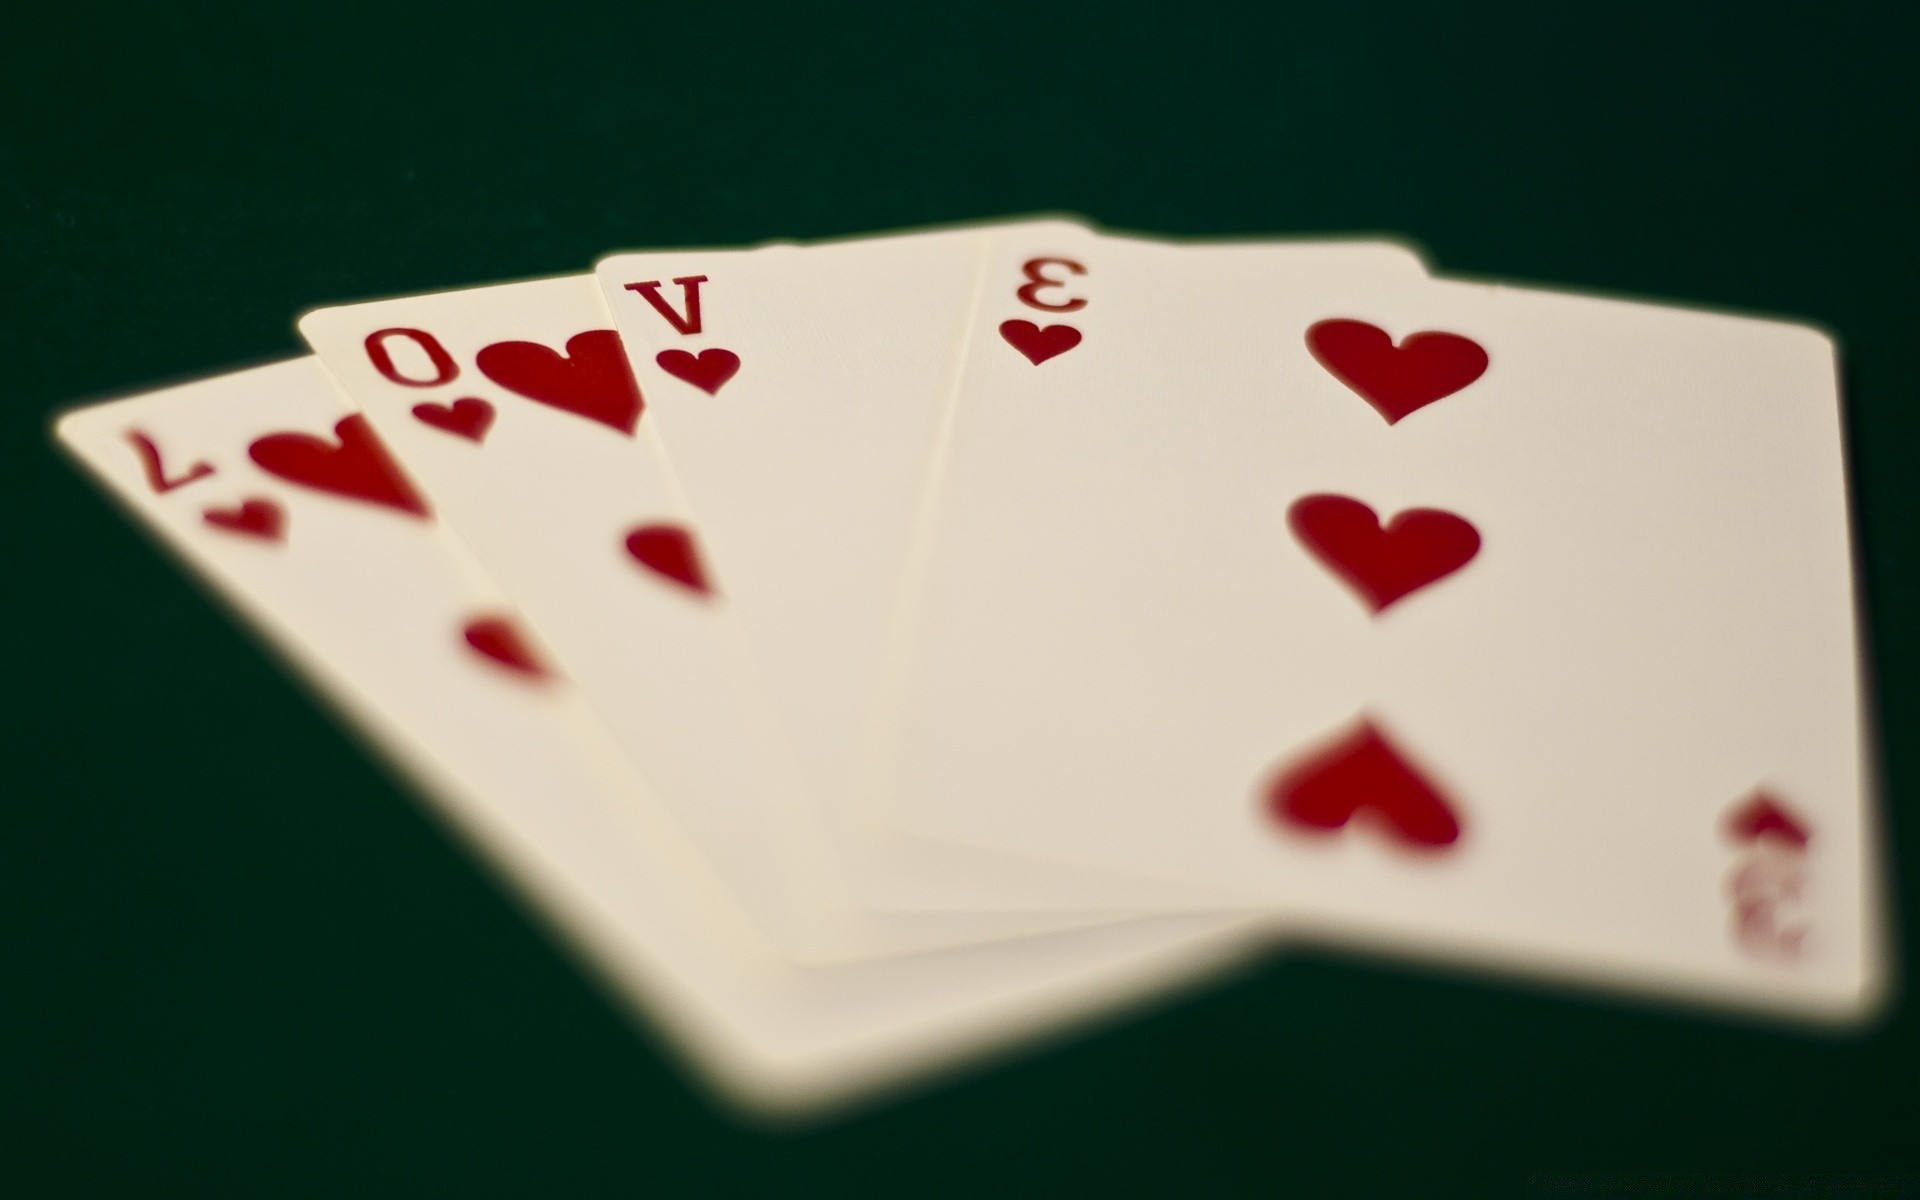 hearts poker casino gambling chance ace luck blackjack risk gambler lucky deck play win spade flush bet leisure game winner roulette